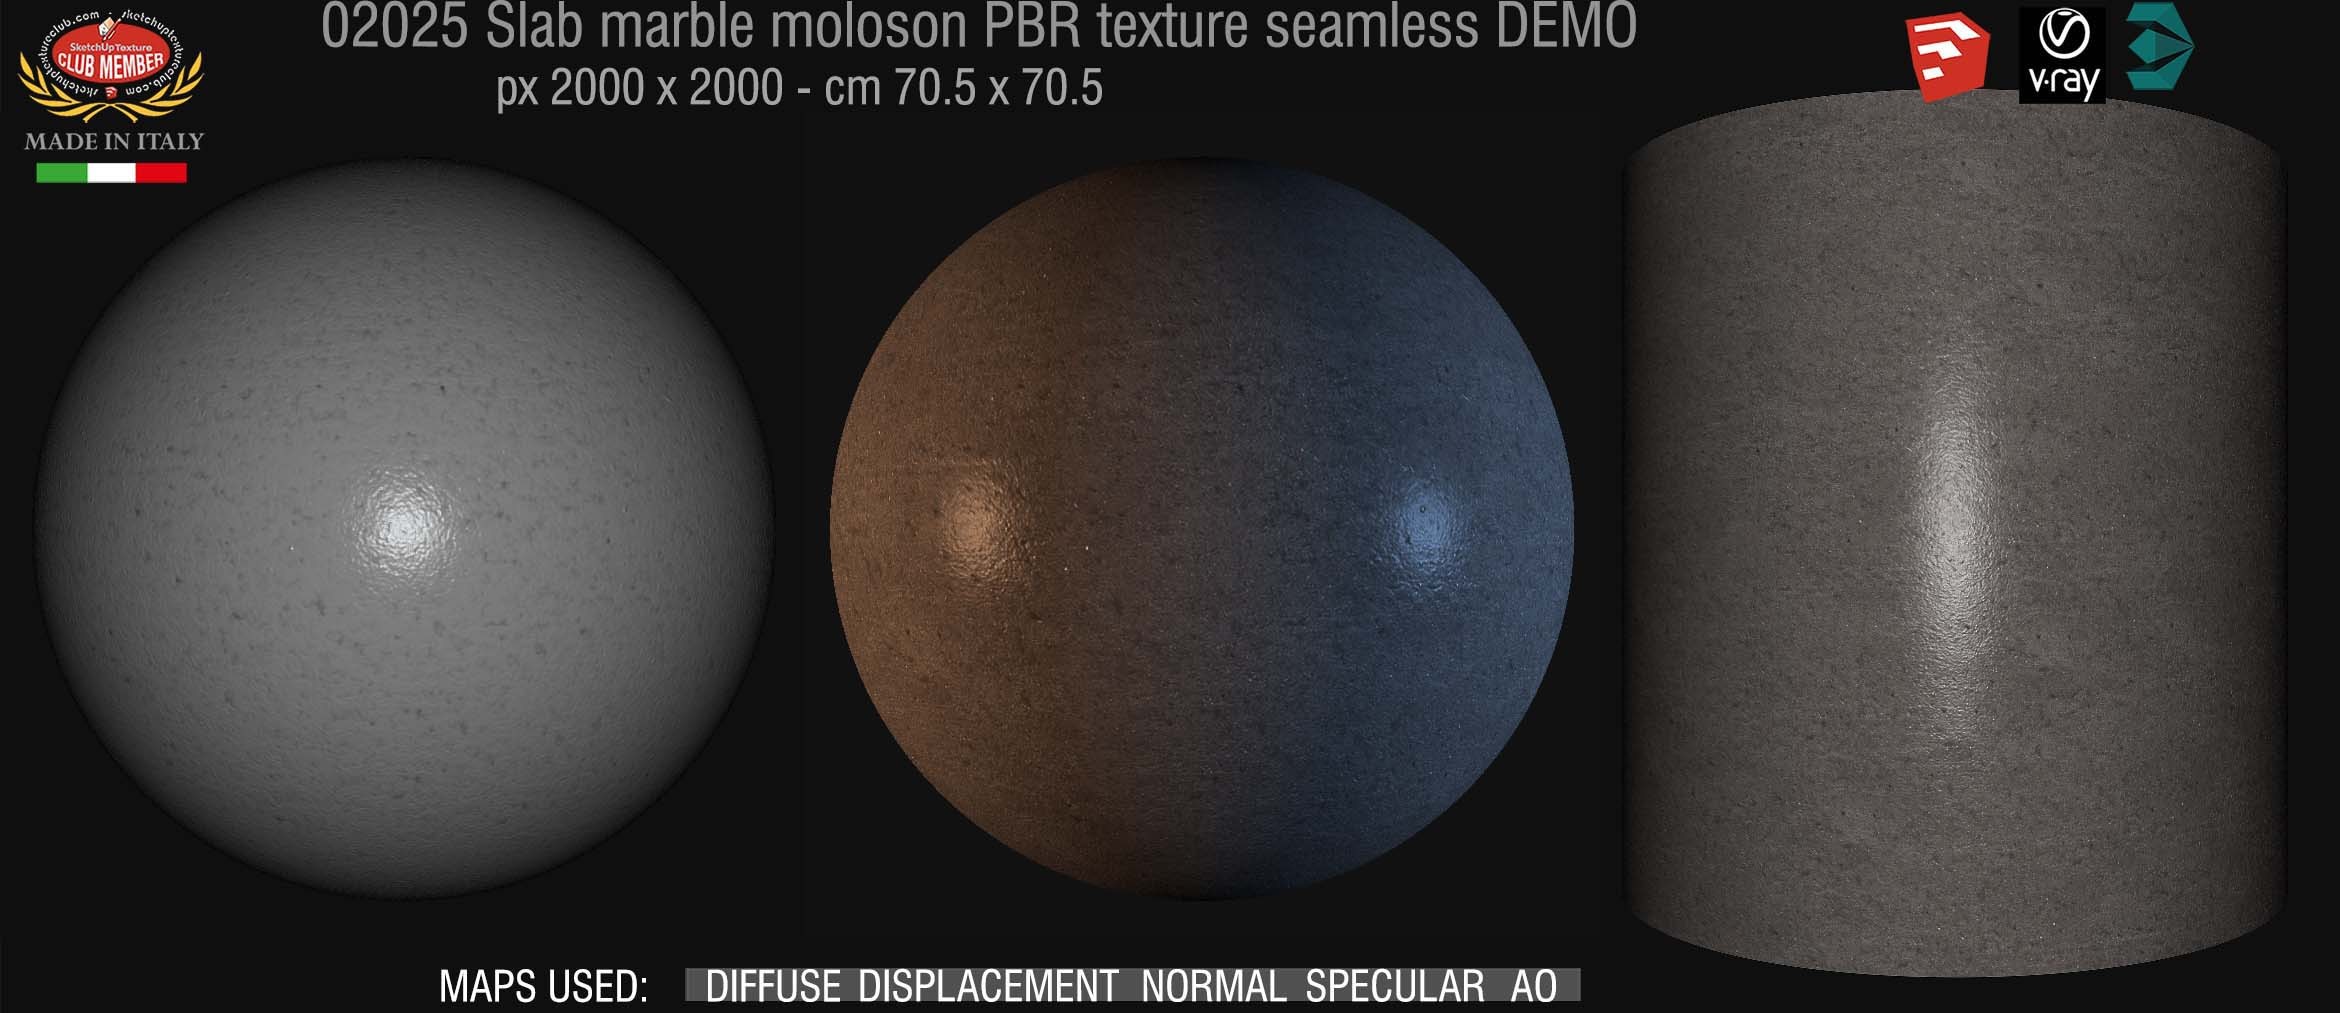 02025 slab marble moloson PBR texture seamless DEMO